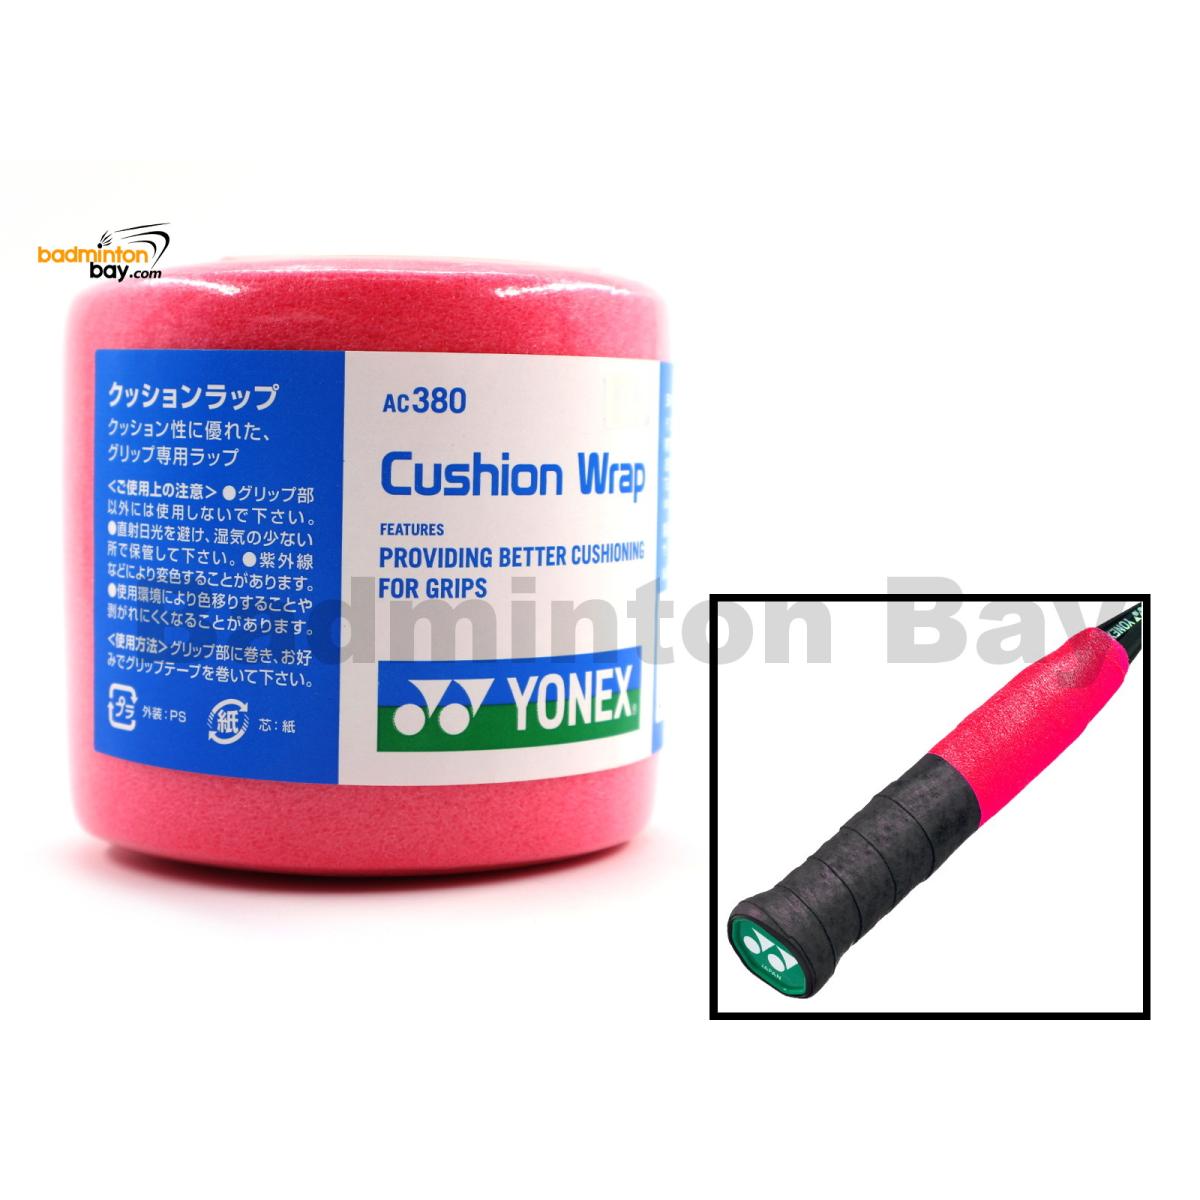 Yonex Cushion Foam Wrap Grip 27m (1 roll) for Badminton Squash Tennis  Racket Sports AC380